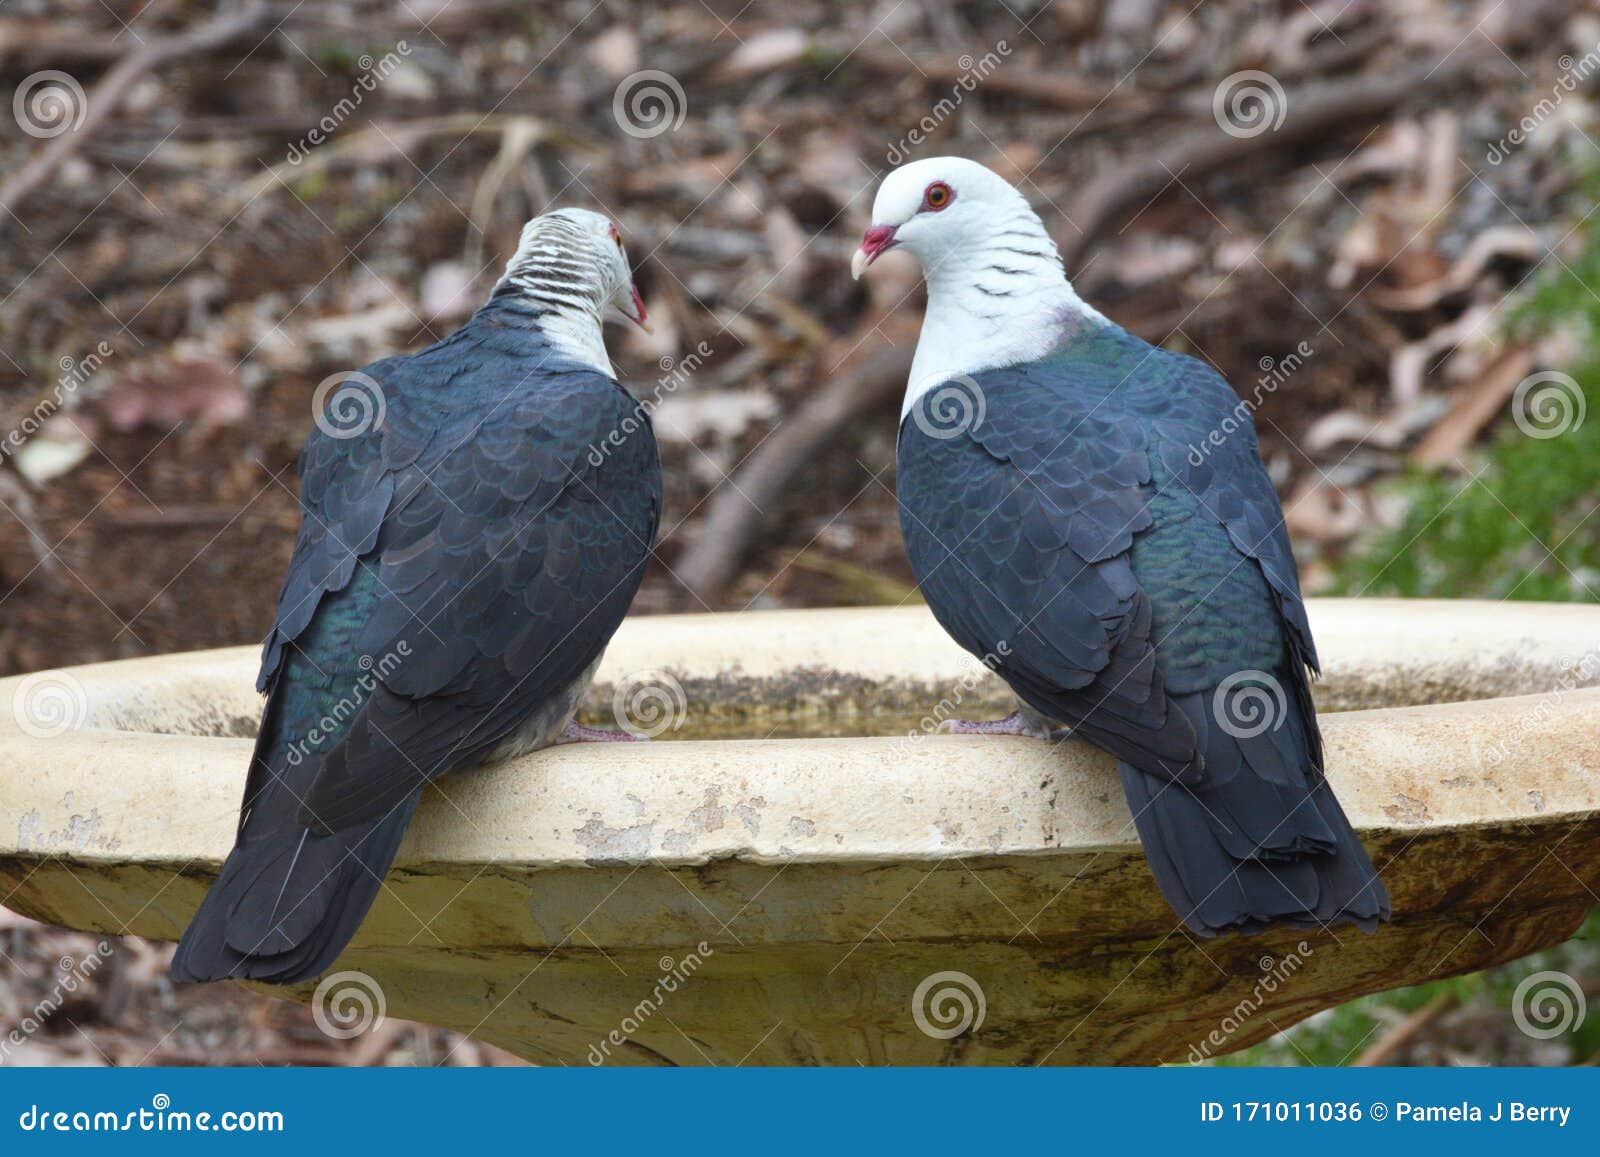 A Pair Of Australian White Headed Pigeon Birds Stock Photo Image Of